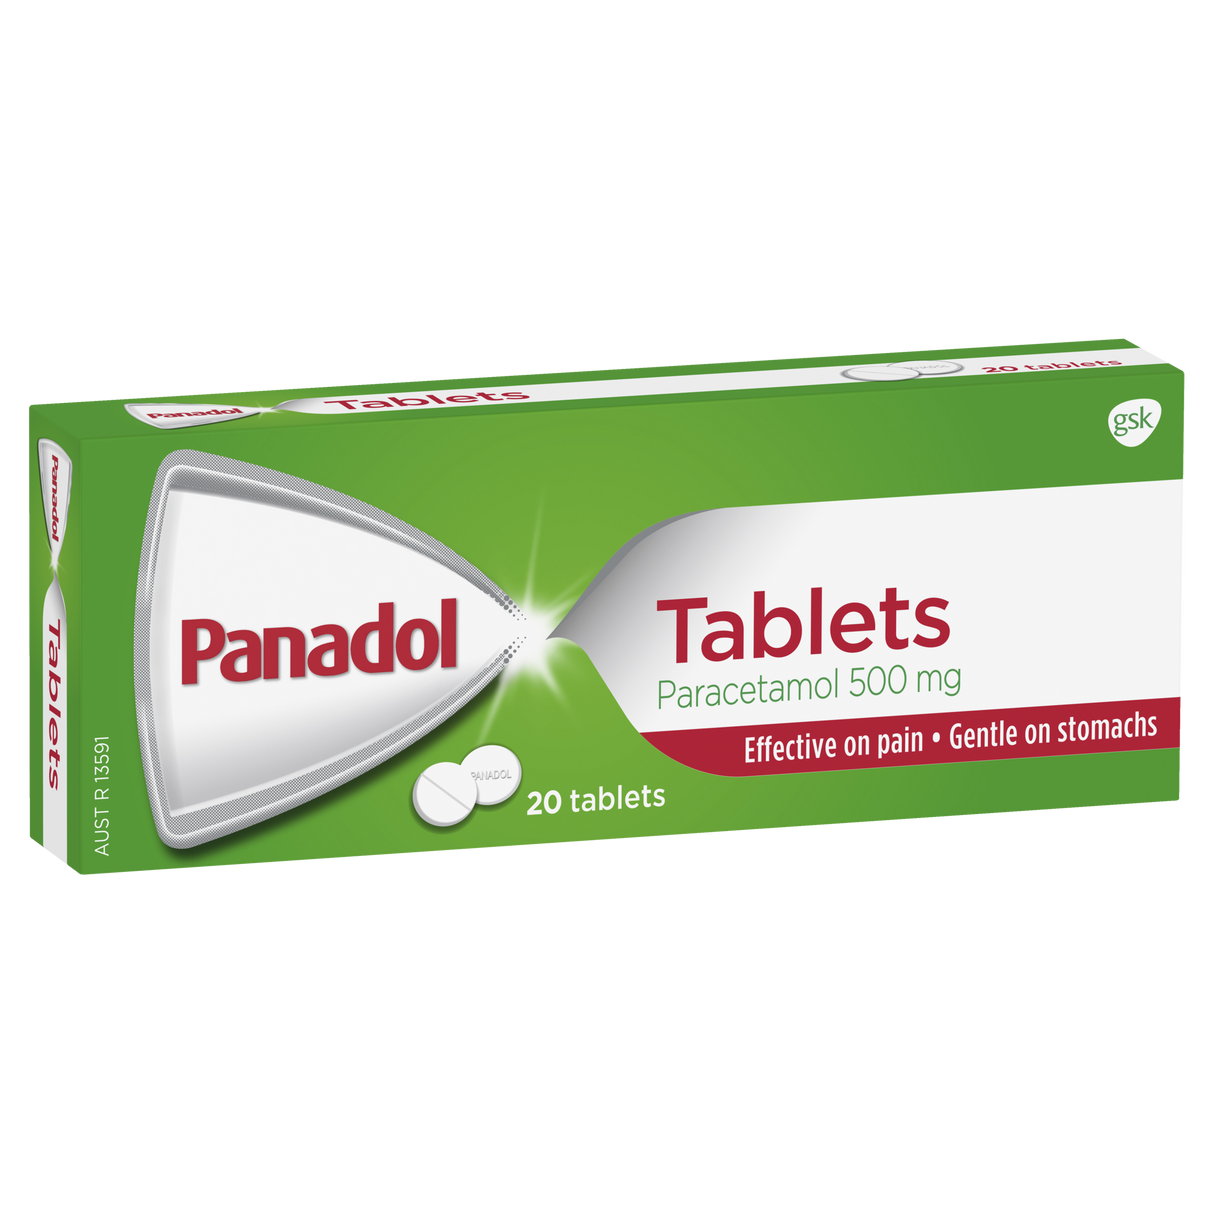 Panadol Paracetamol 500mg Tablets 20 pack